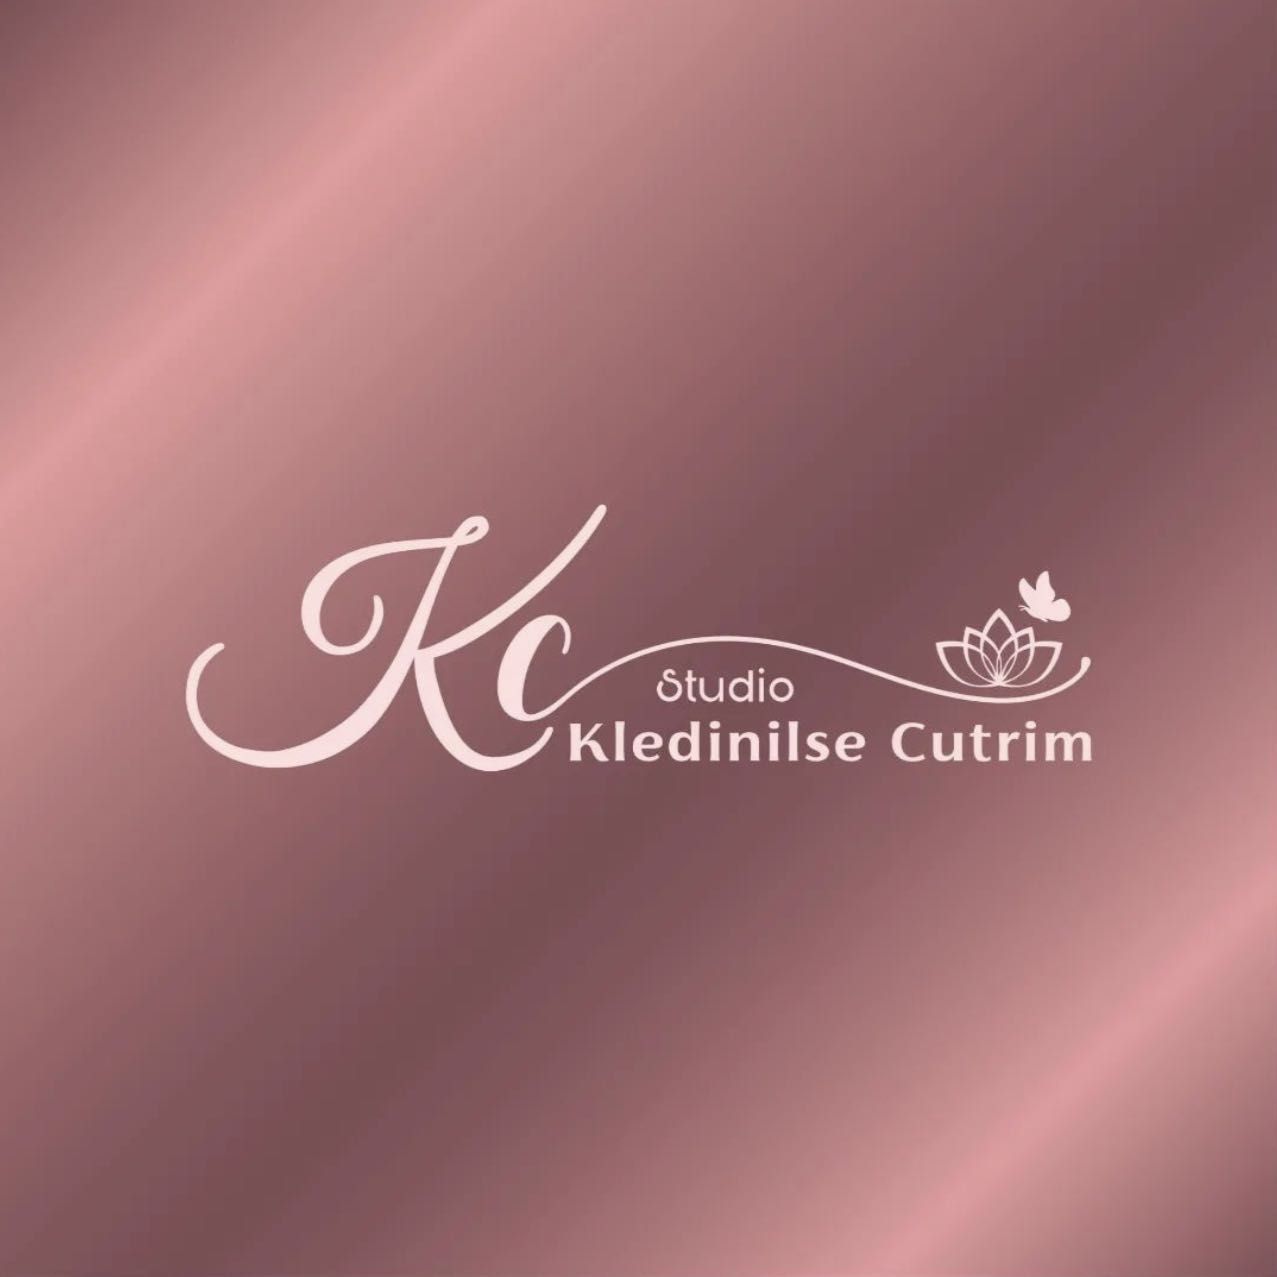 KCstudio Kledinilse Cutrim, Labayru kalea, 38, Lonja 2 Derecha, 48012, Bilbao